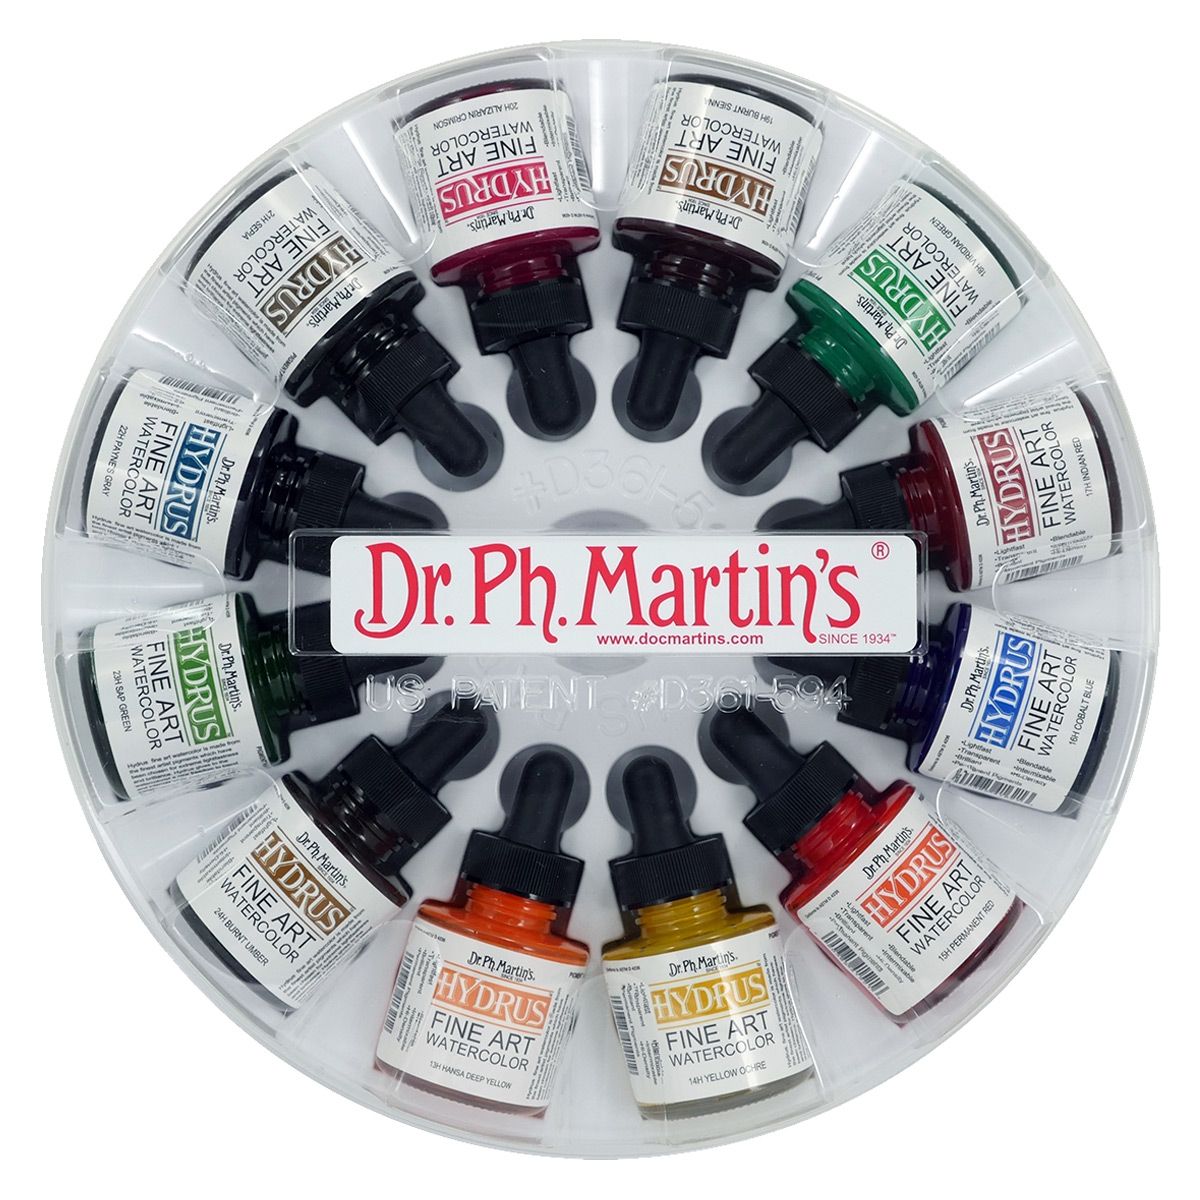 Dr. Ph. Martin&s Hydrus Fine Art Watercolor Set 2 of 12 Bottles 1 oz.